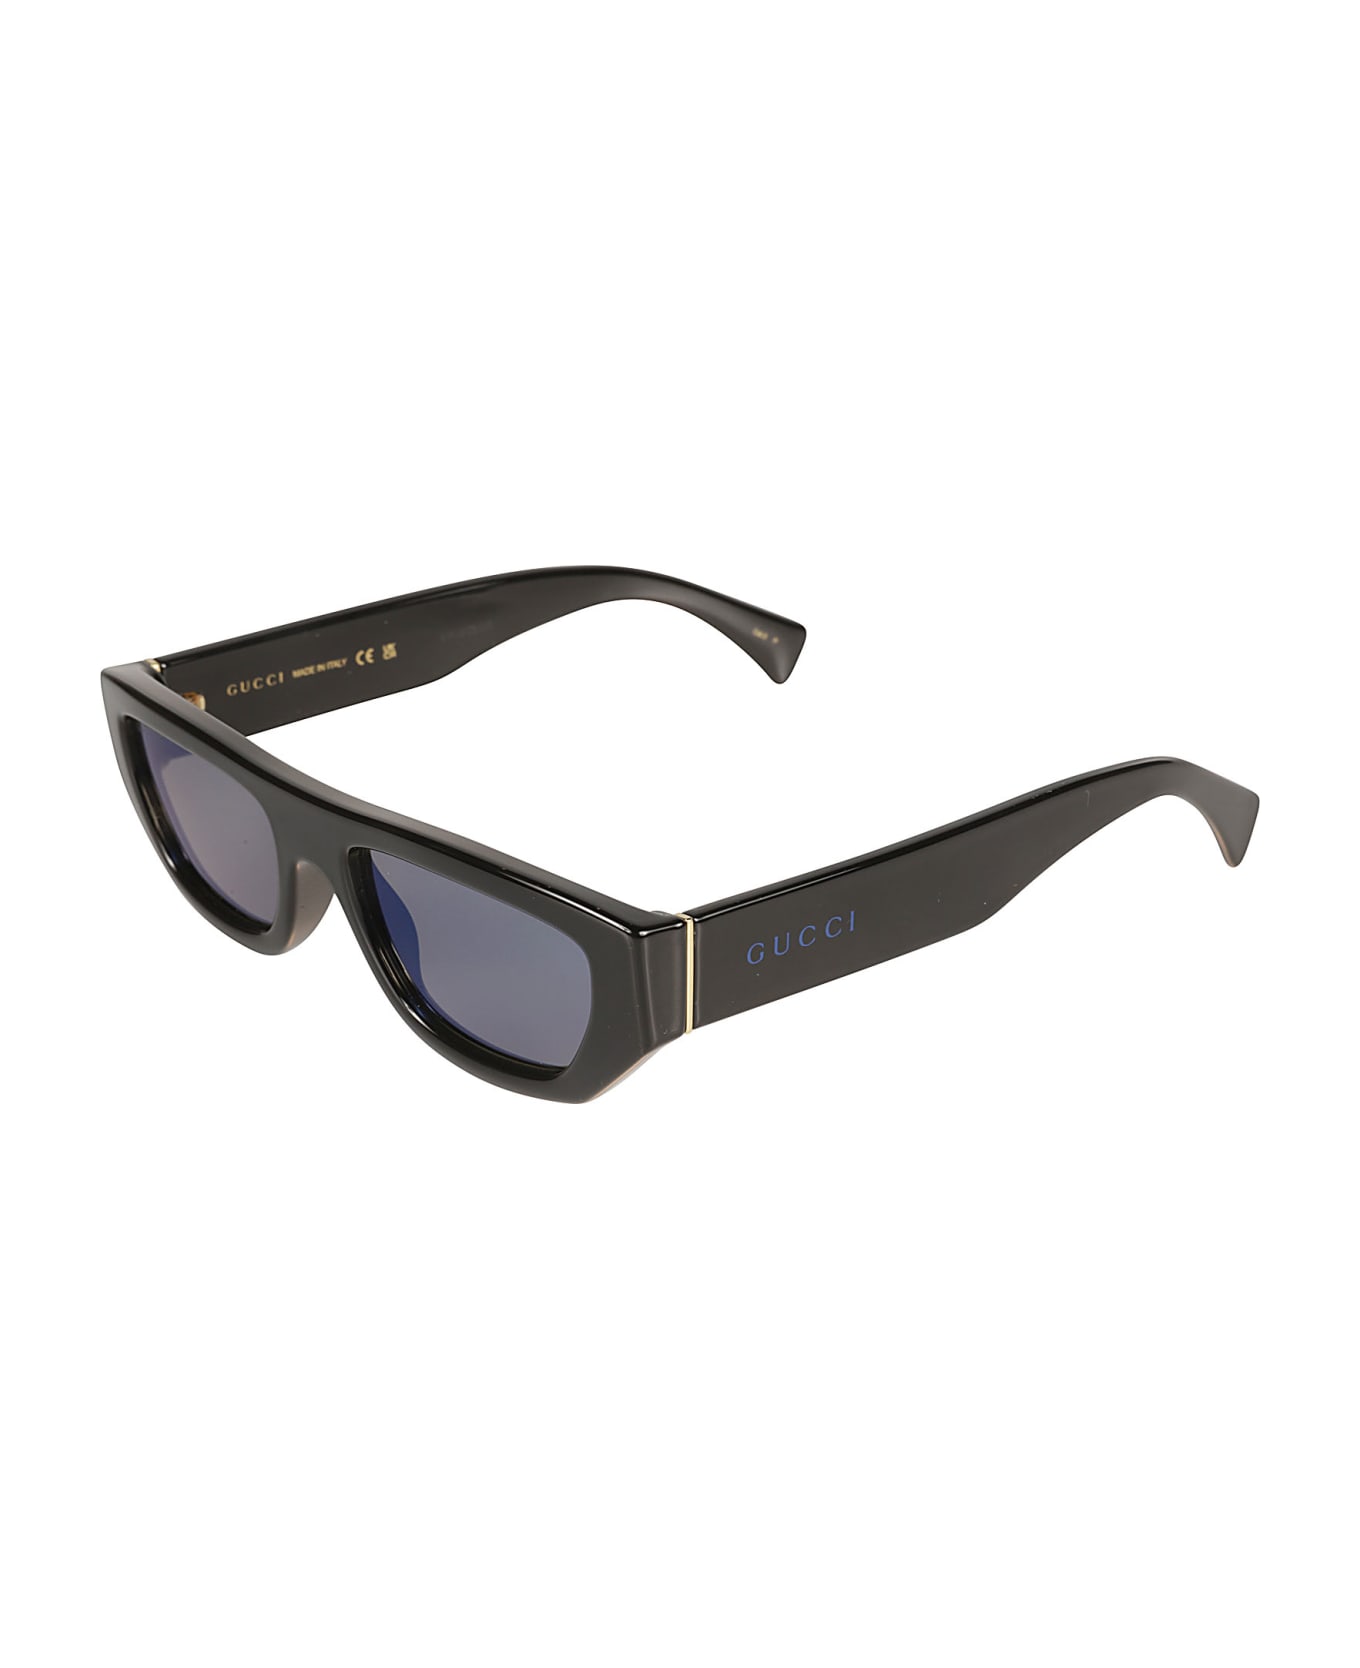 Gucci Eyewear Rectangular Frame Logo Sided Sunglasses - Black/Blue